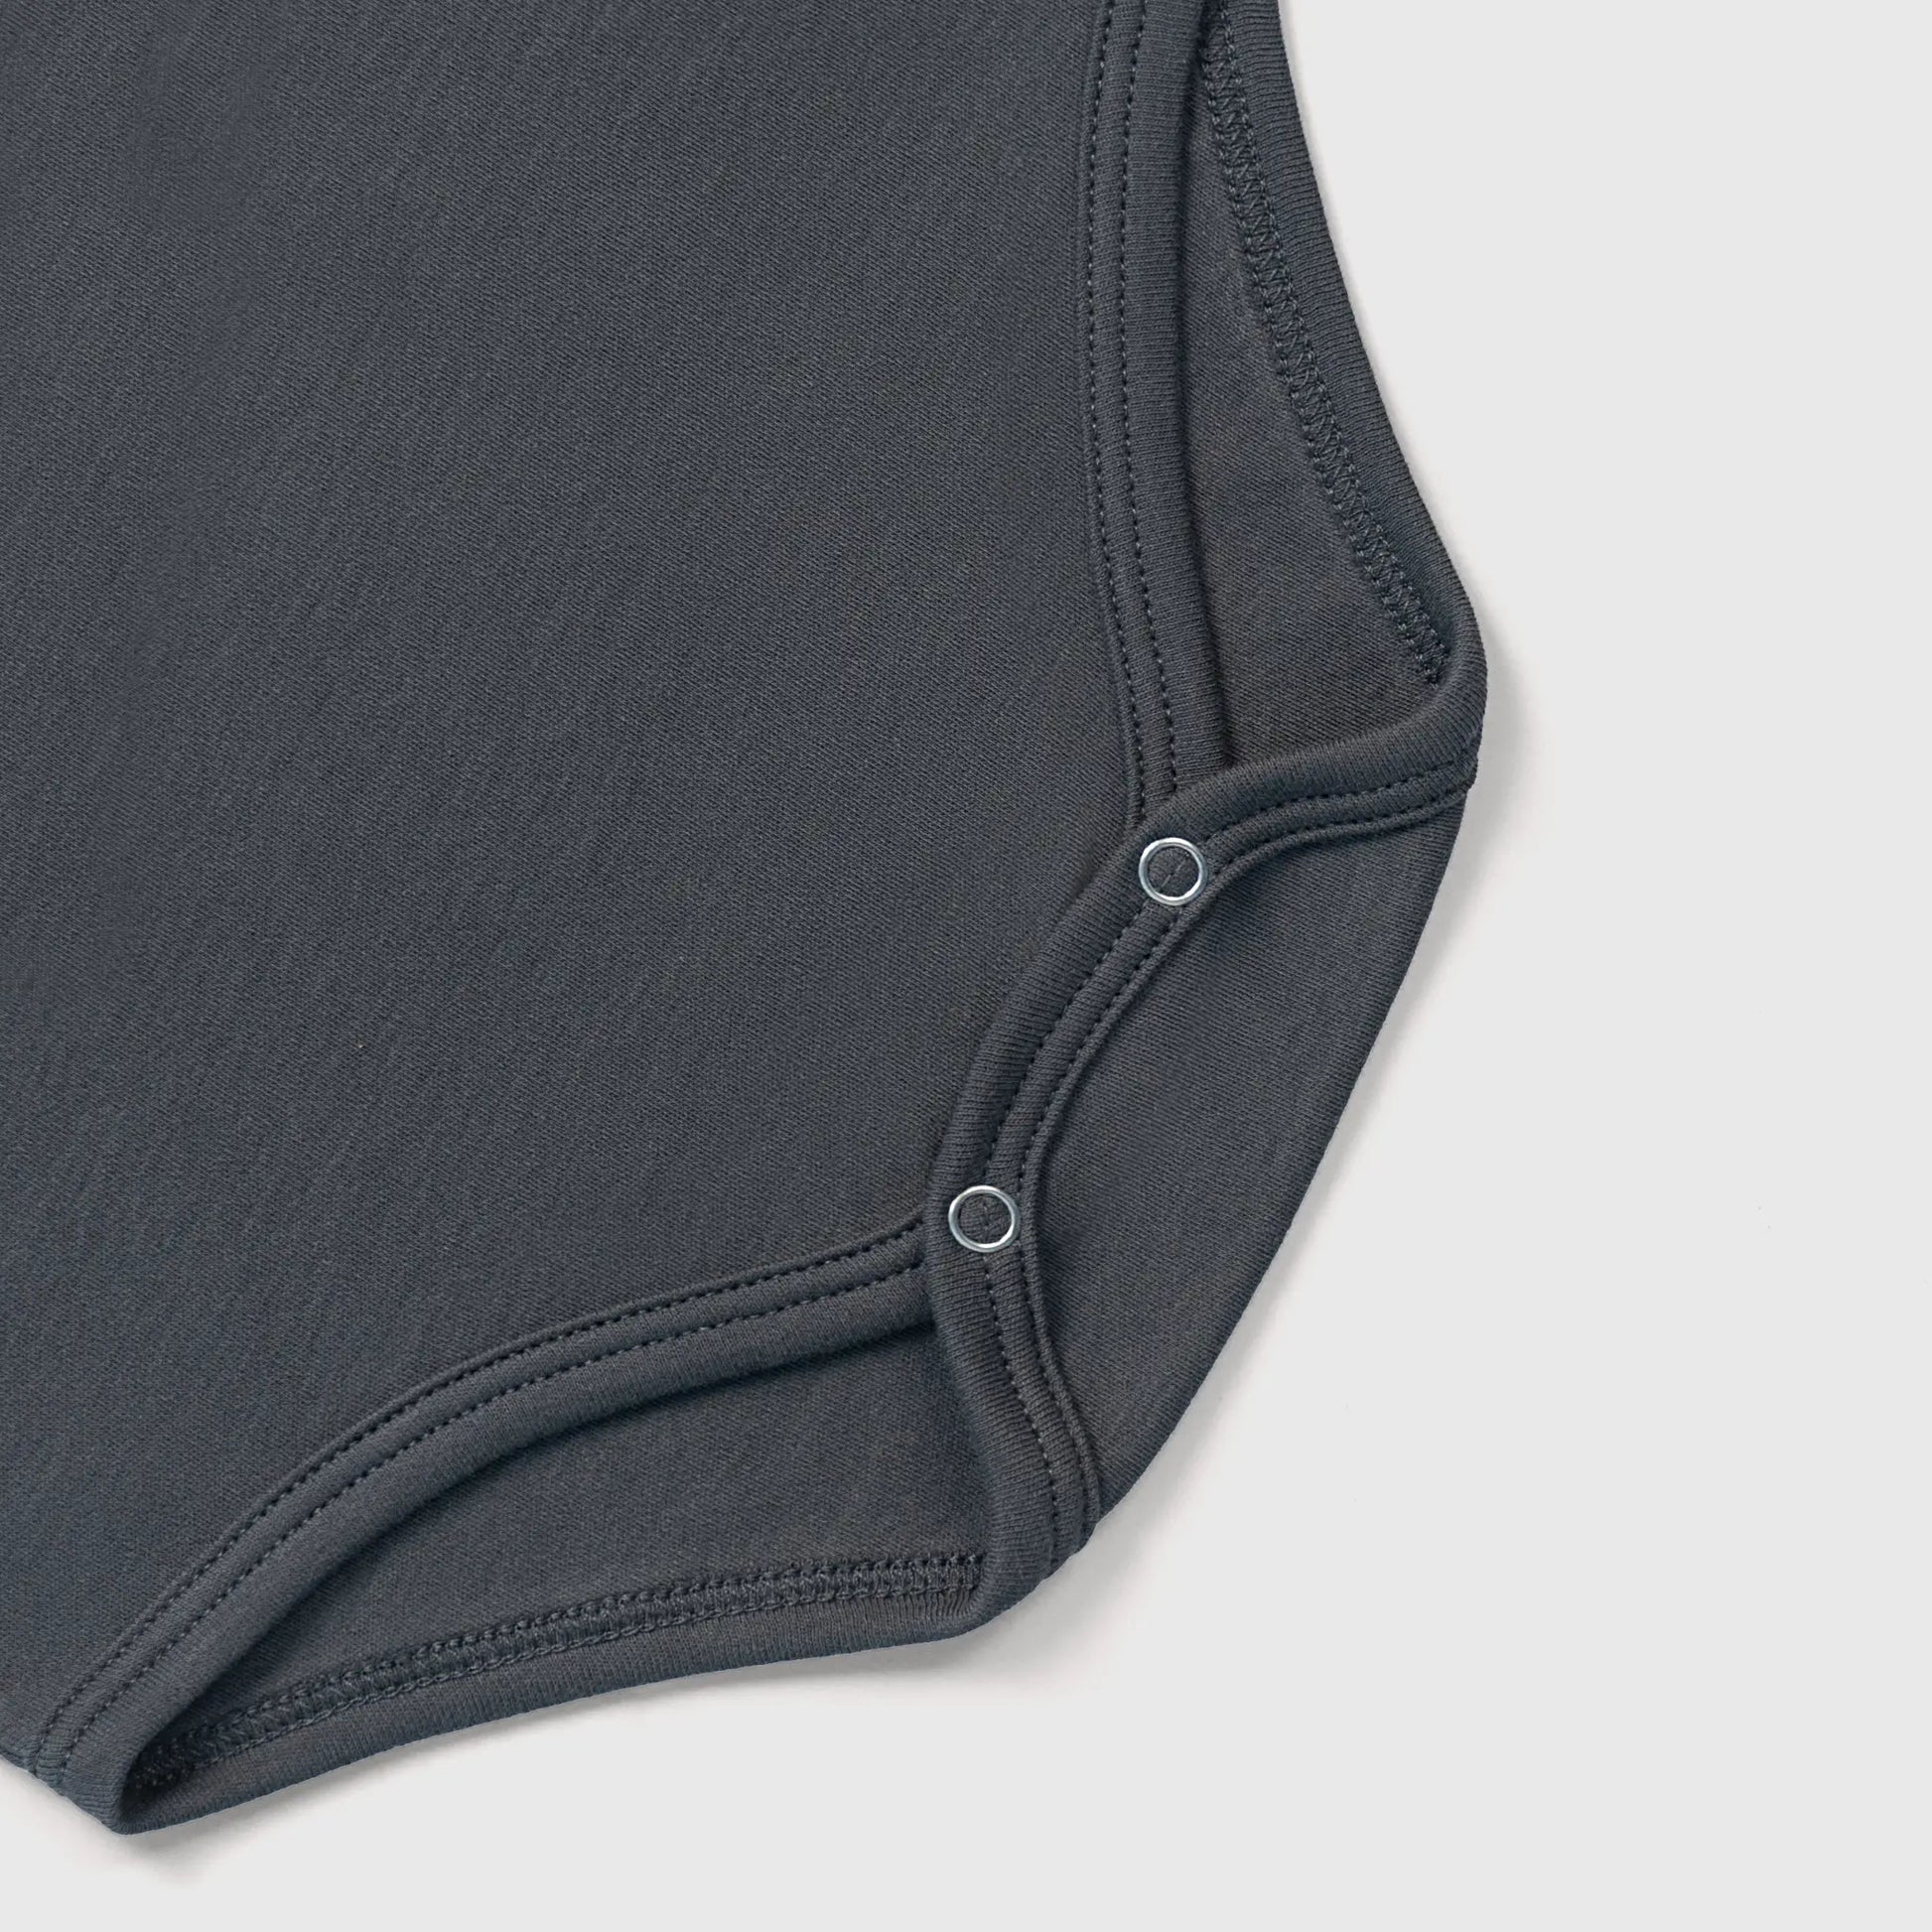 Baby's Organic Pima Cotton Short-Sleeve Bodysuit color Gray